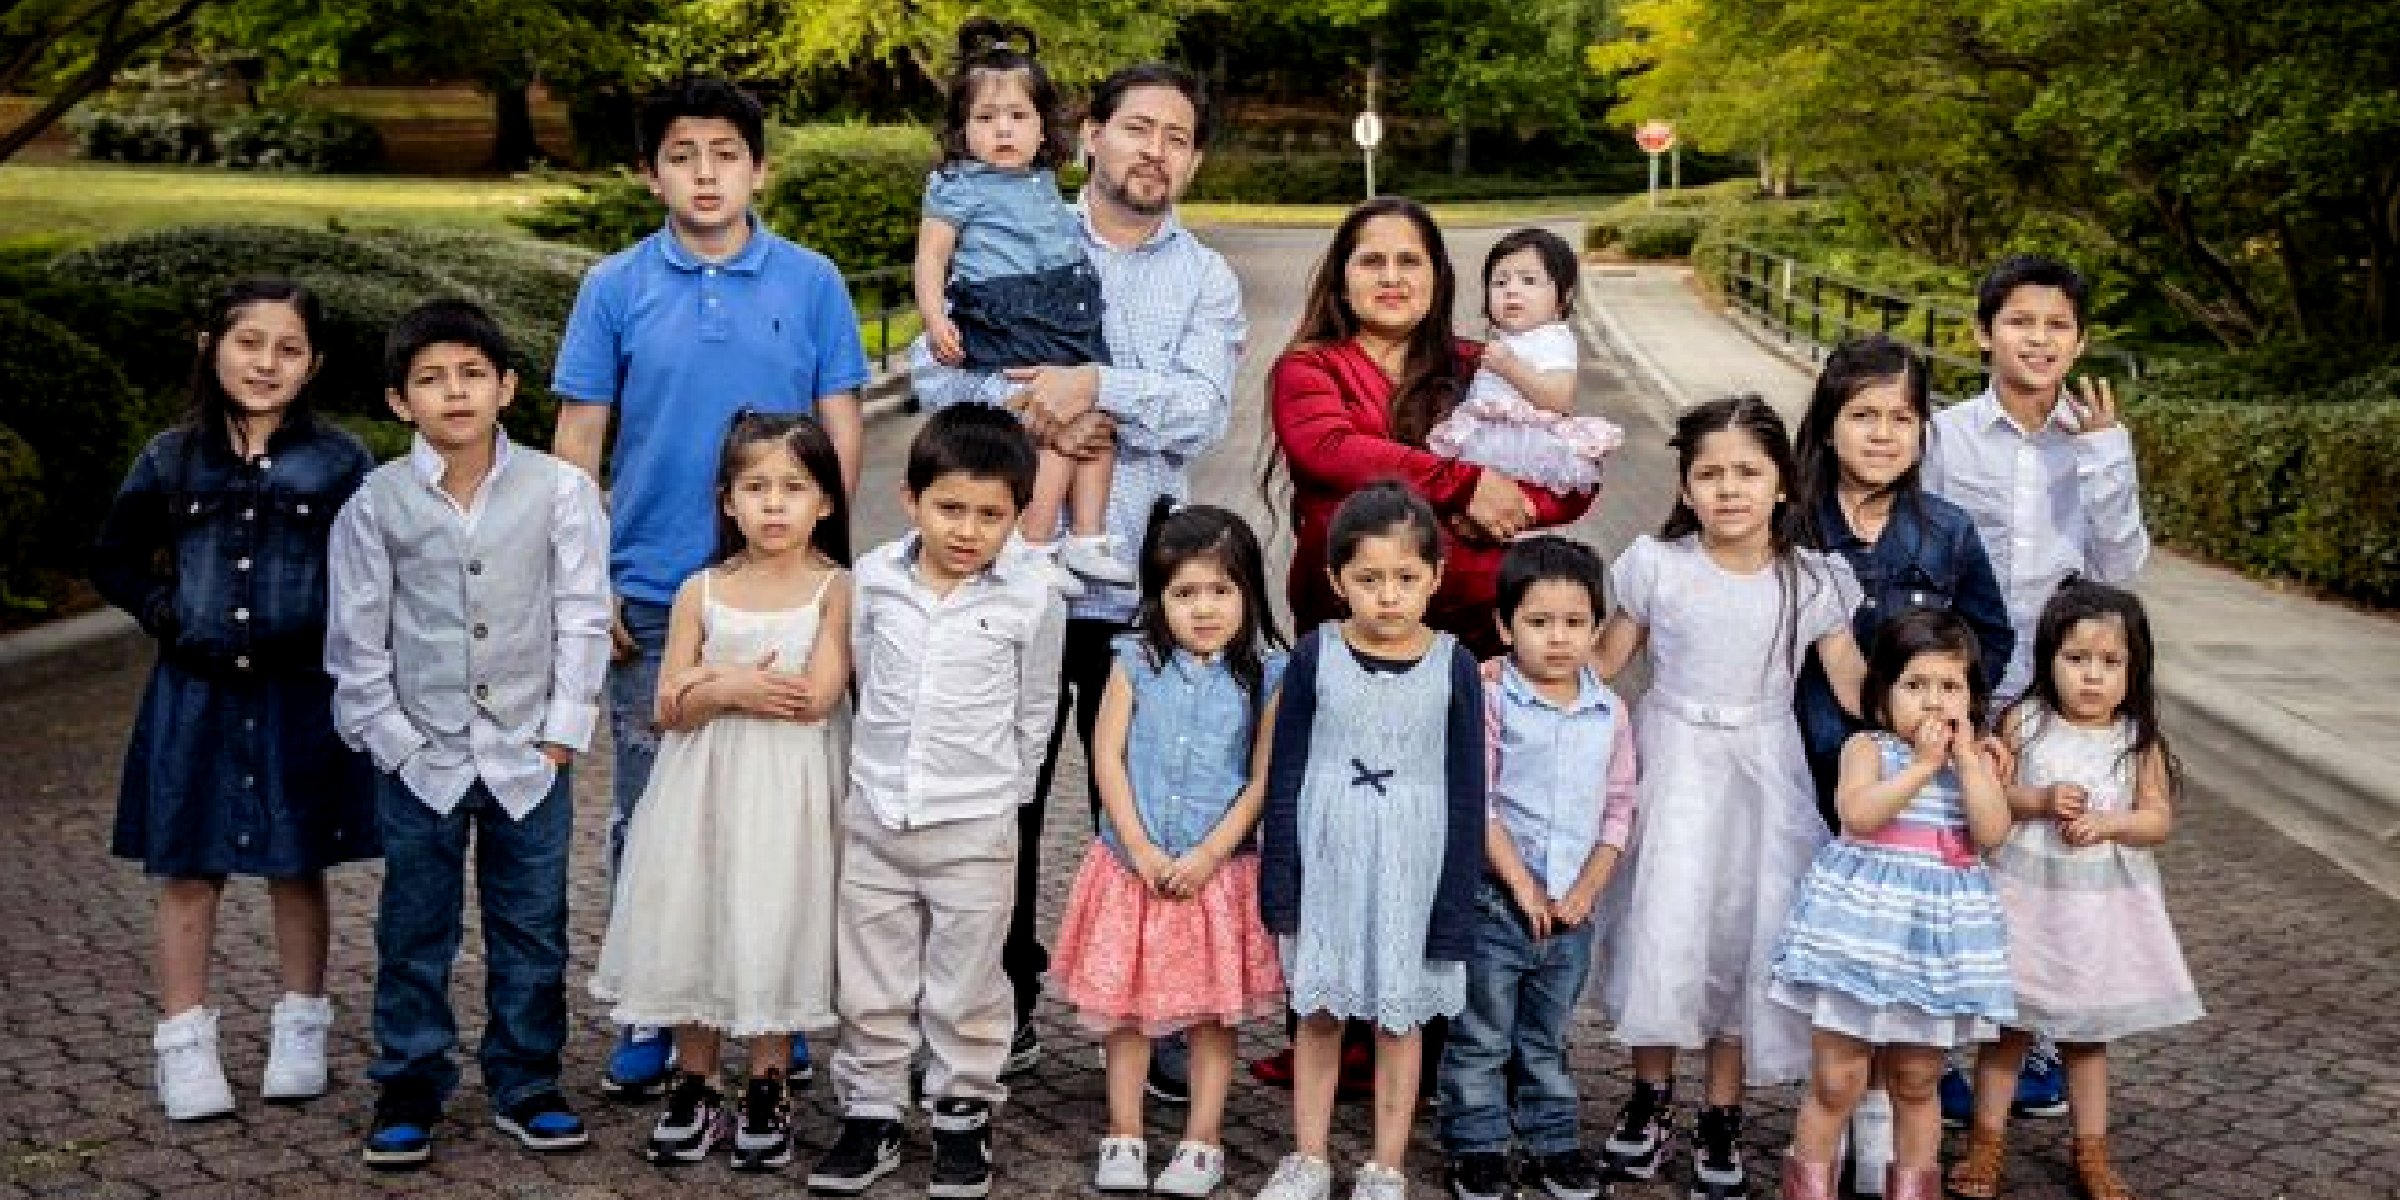 Patty Hernandez et ses enfants | Photo : facebook.com/dailymirror